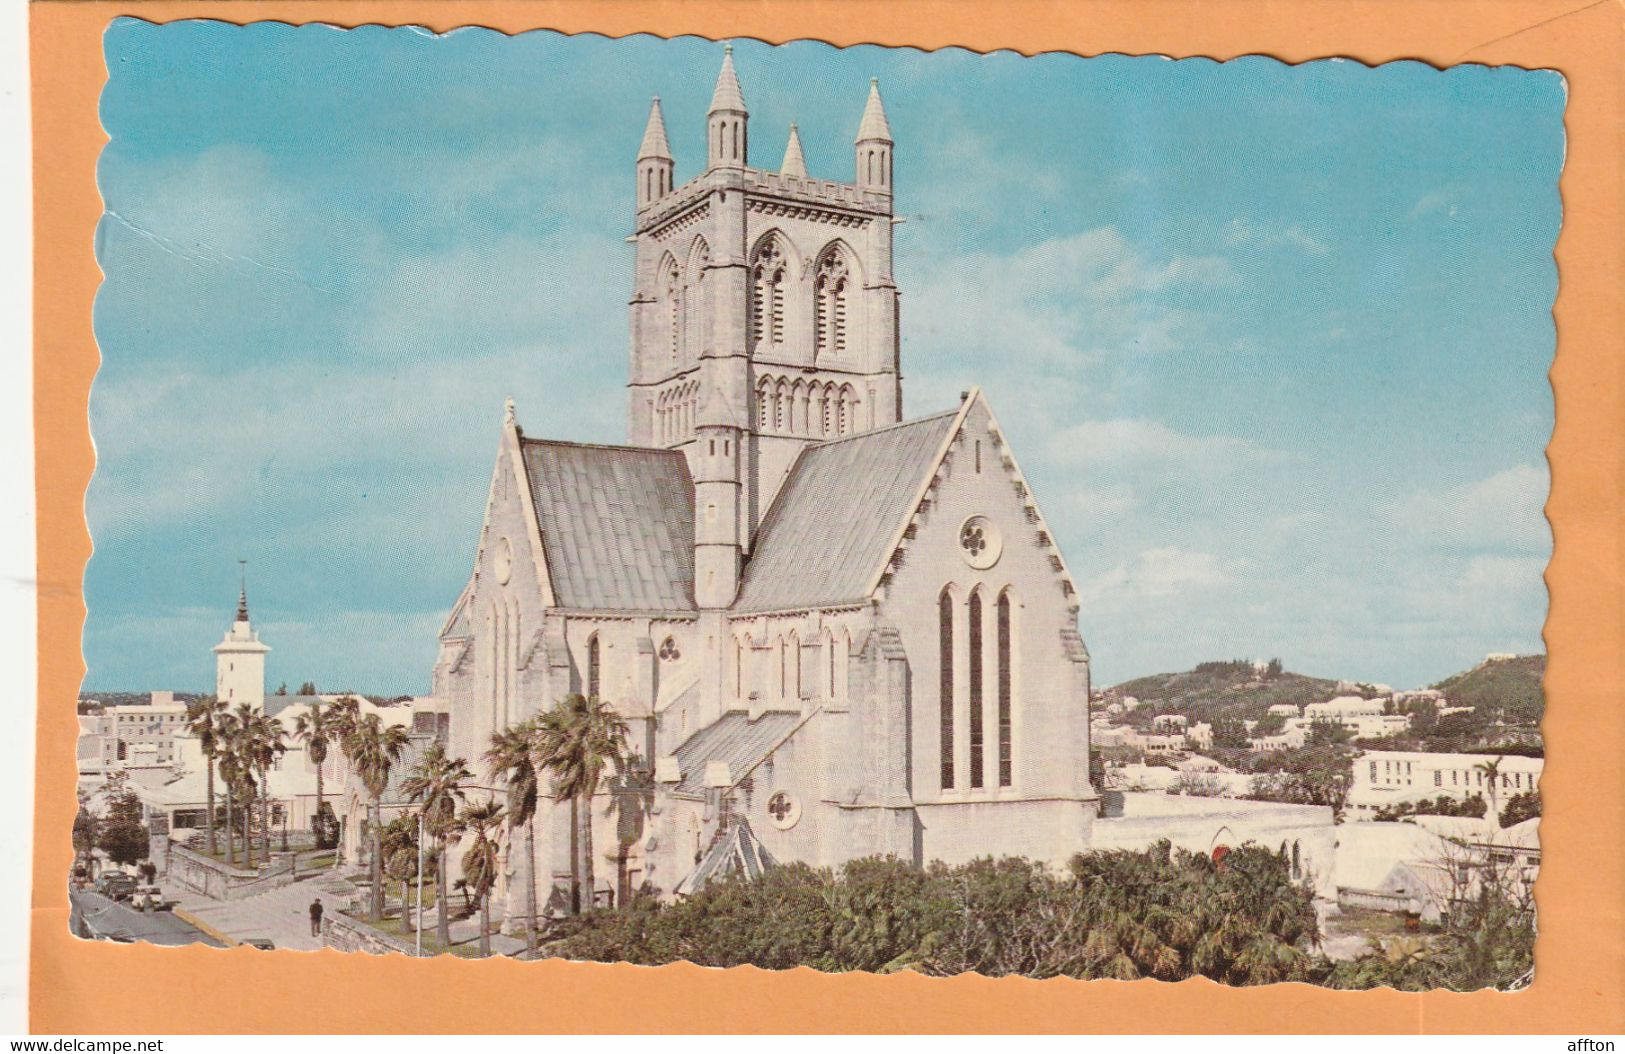 Bermuda Old Postcard Mailed - Bermuda